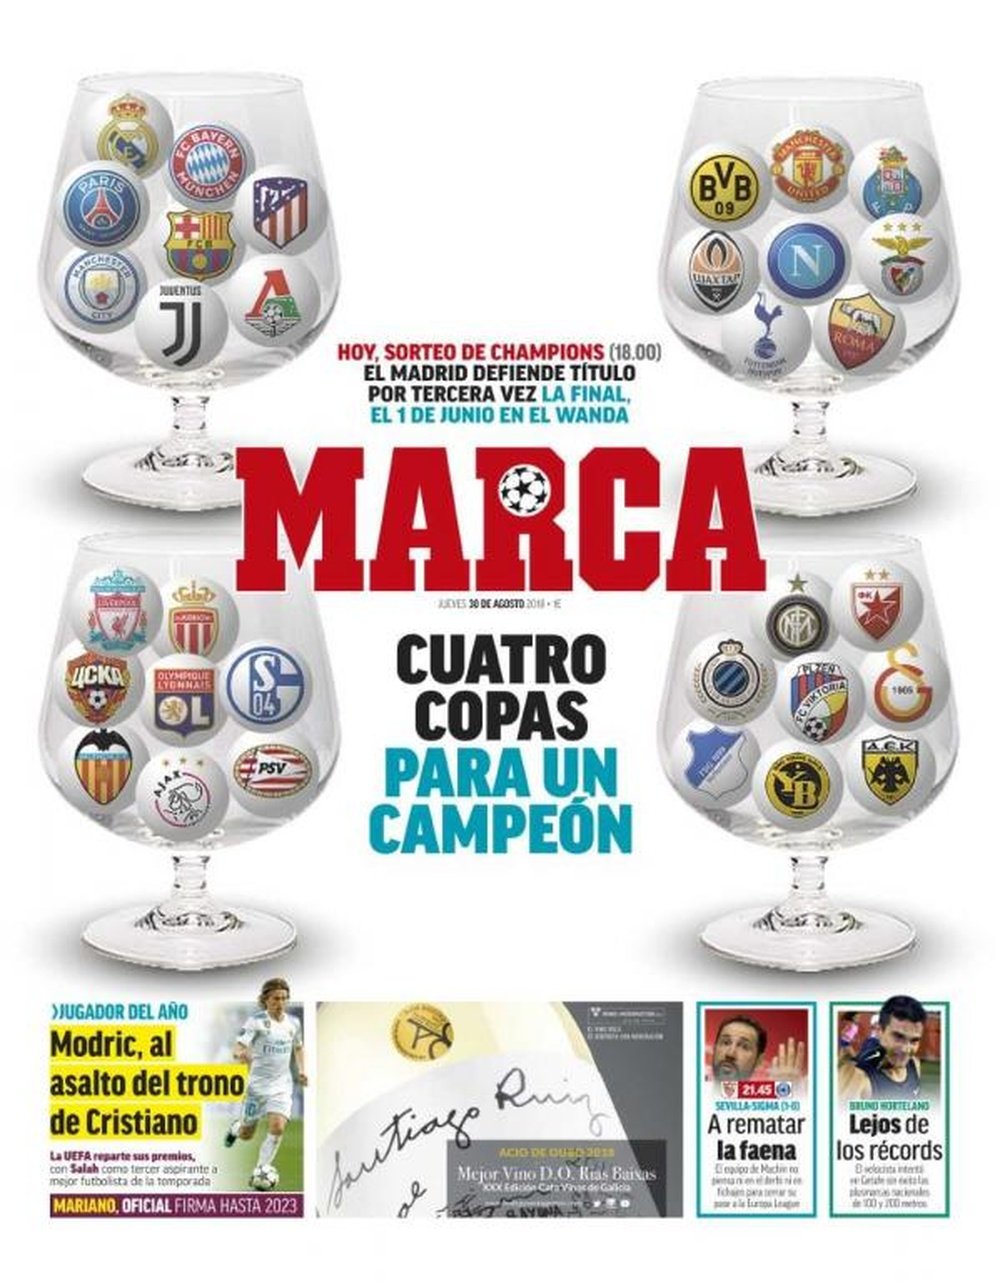 Capa do jornal 'Marca' de 30-08-18. Marca